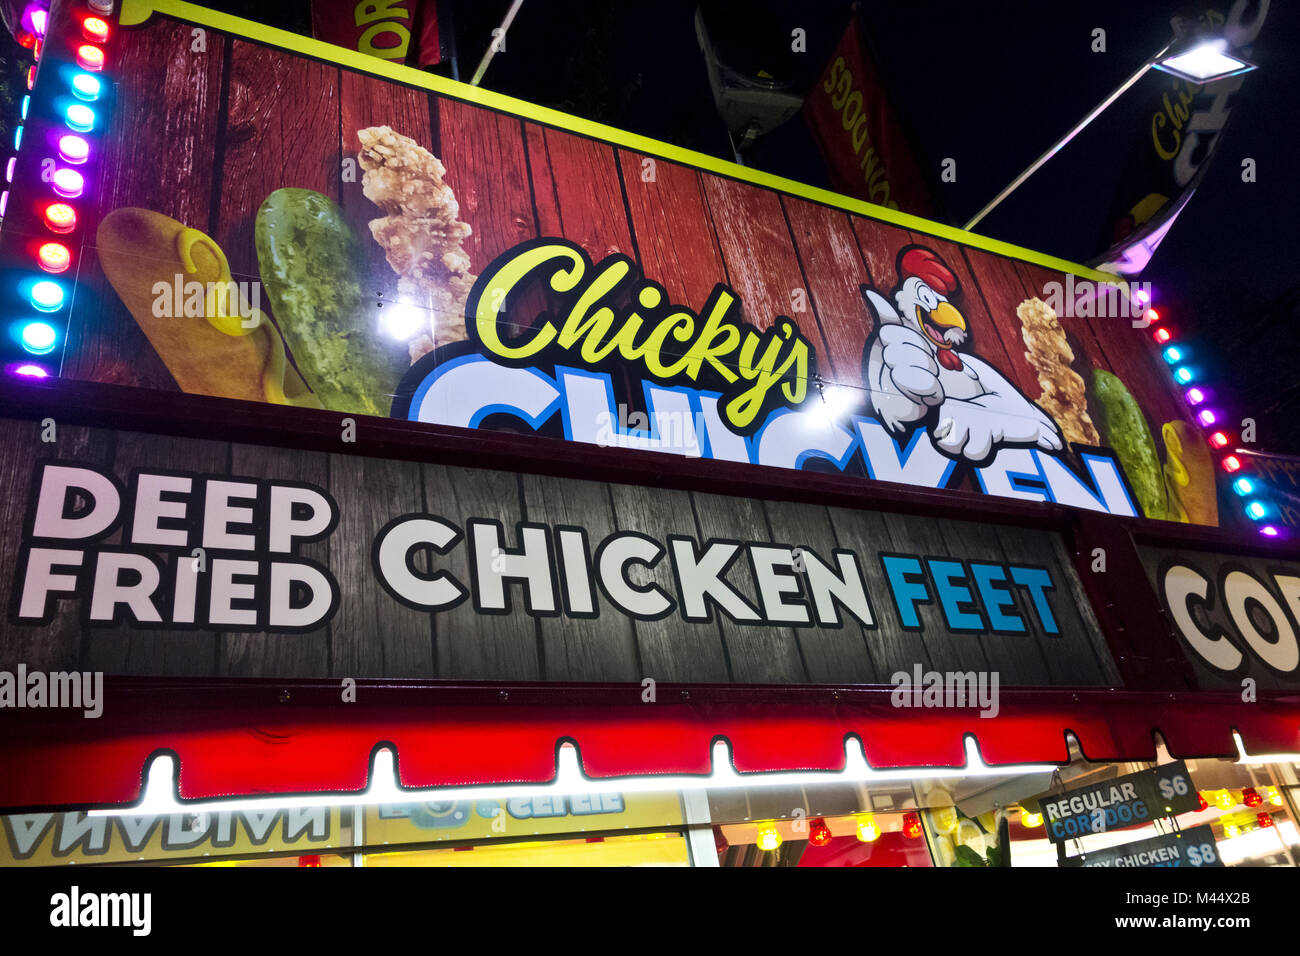 Chicky Deep Fried Chicken Feet Essen stand auf der Pacific National Exhibition in Vancouver, BC, Kanada. PNE Essen stand in Vancouver. Stockfoto